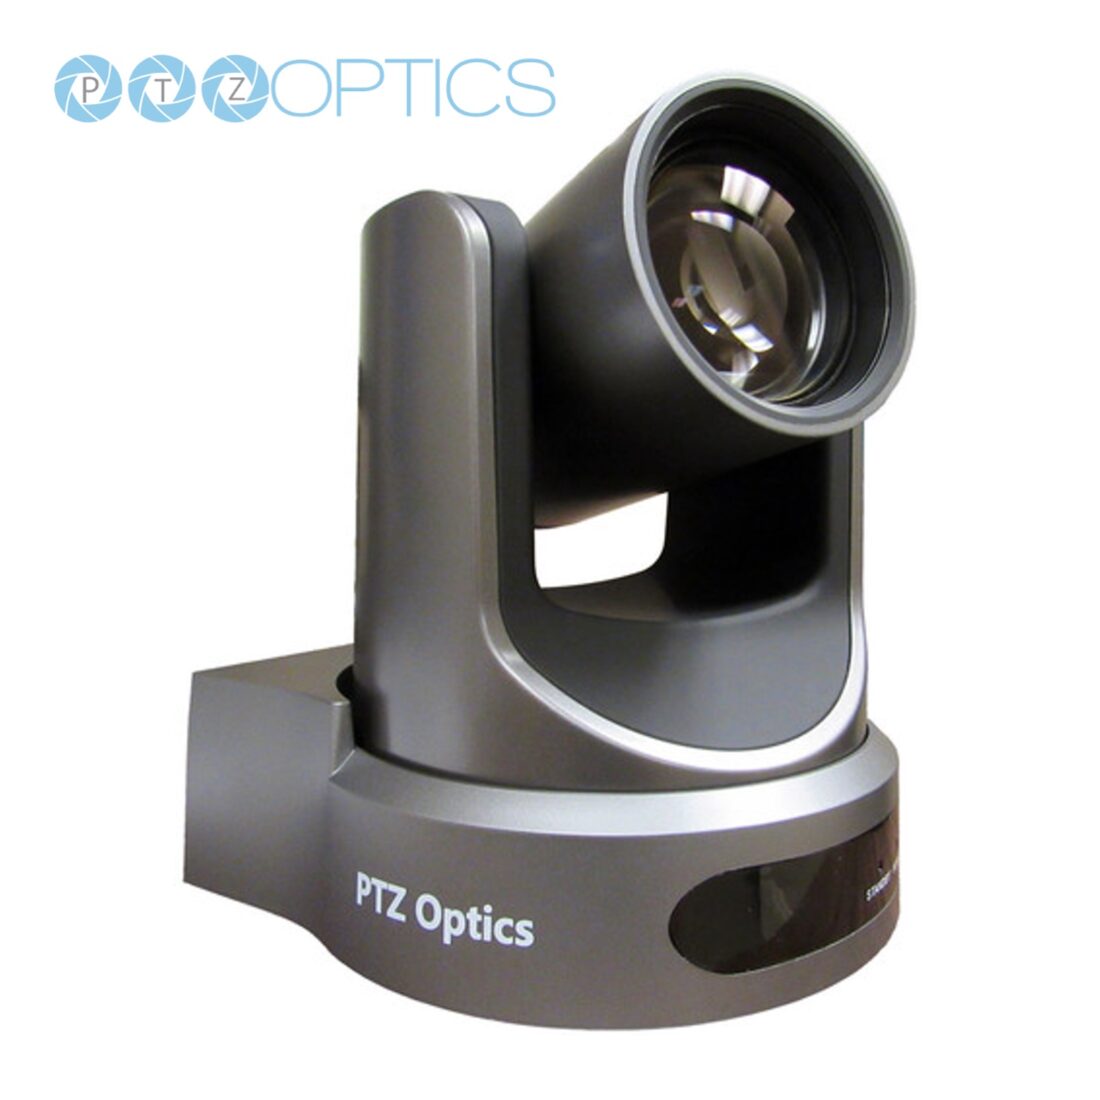 PTZ Optics camera grey